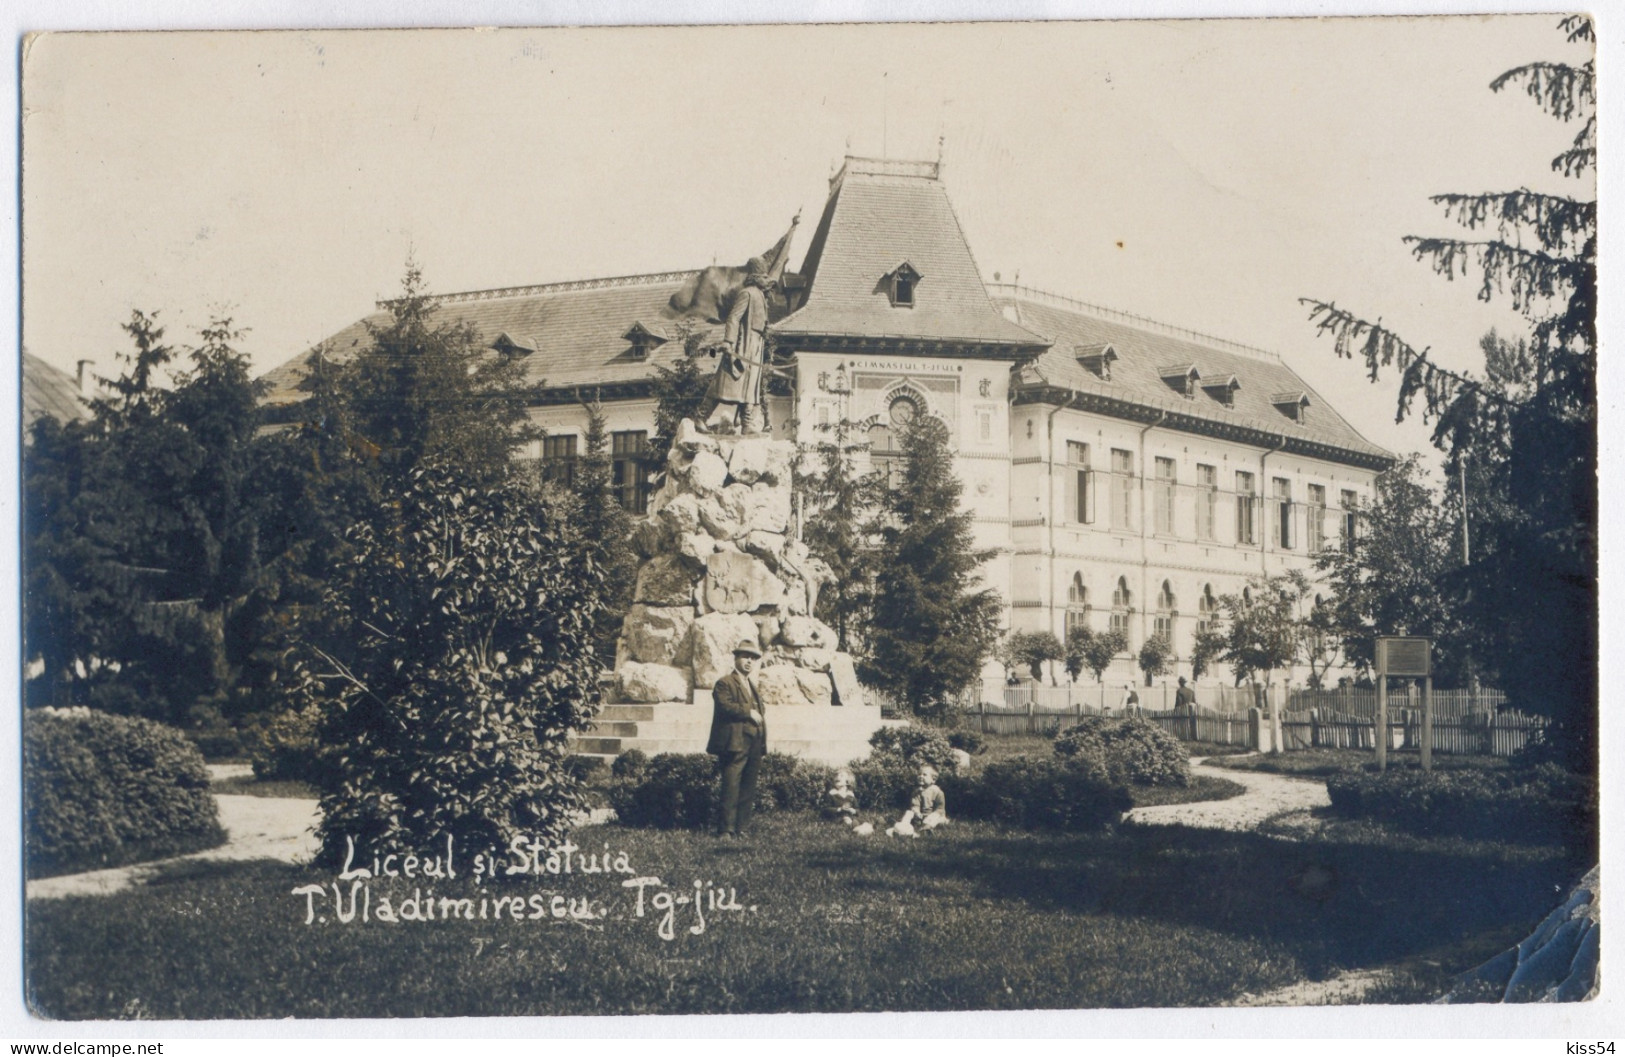 RO 68 - 12153 TG-JIU, Gorj, High School, Statue, Romania - Old Postcard, Real PHOTO - Used - 1930 - Rumänien